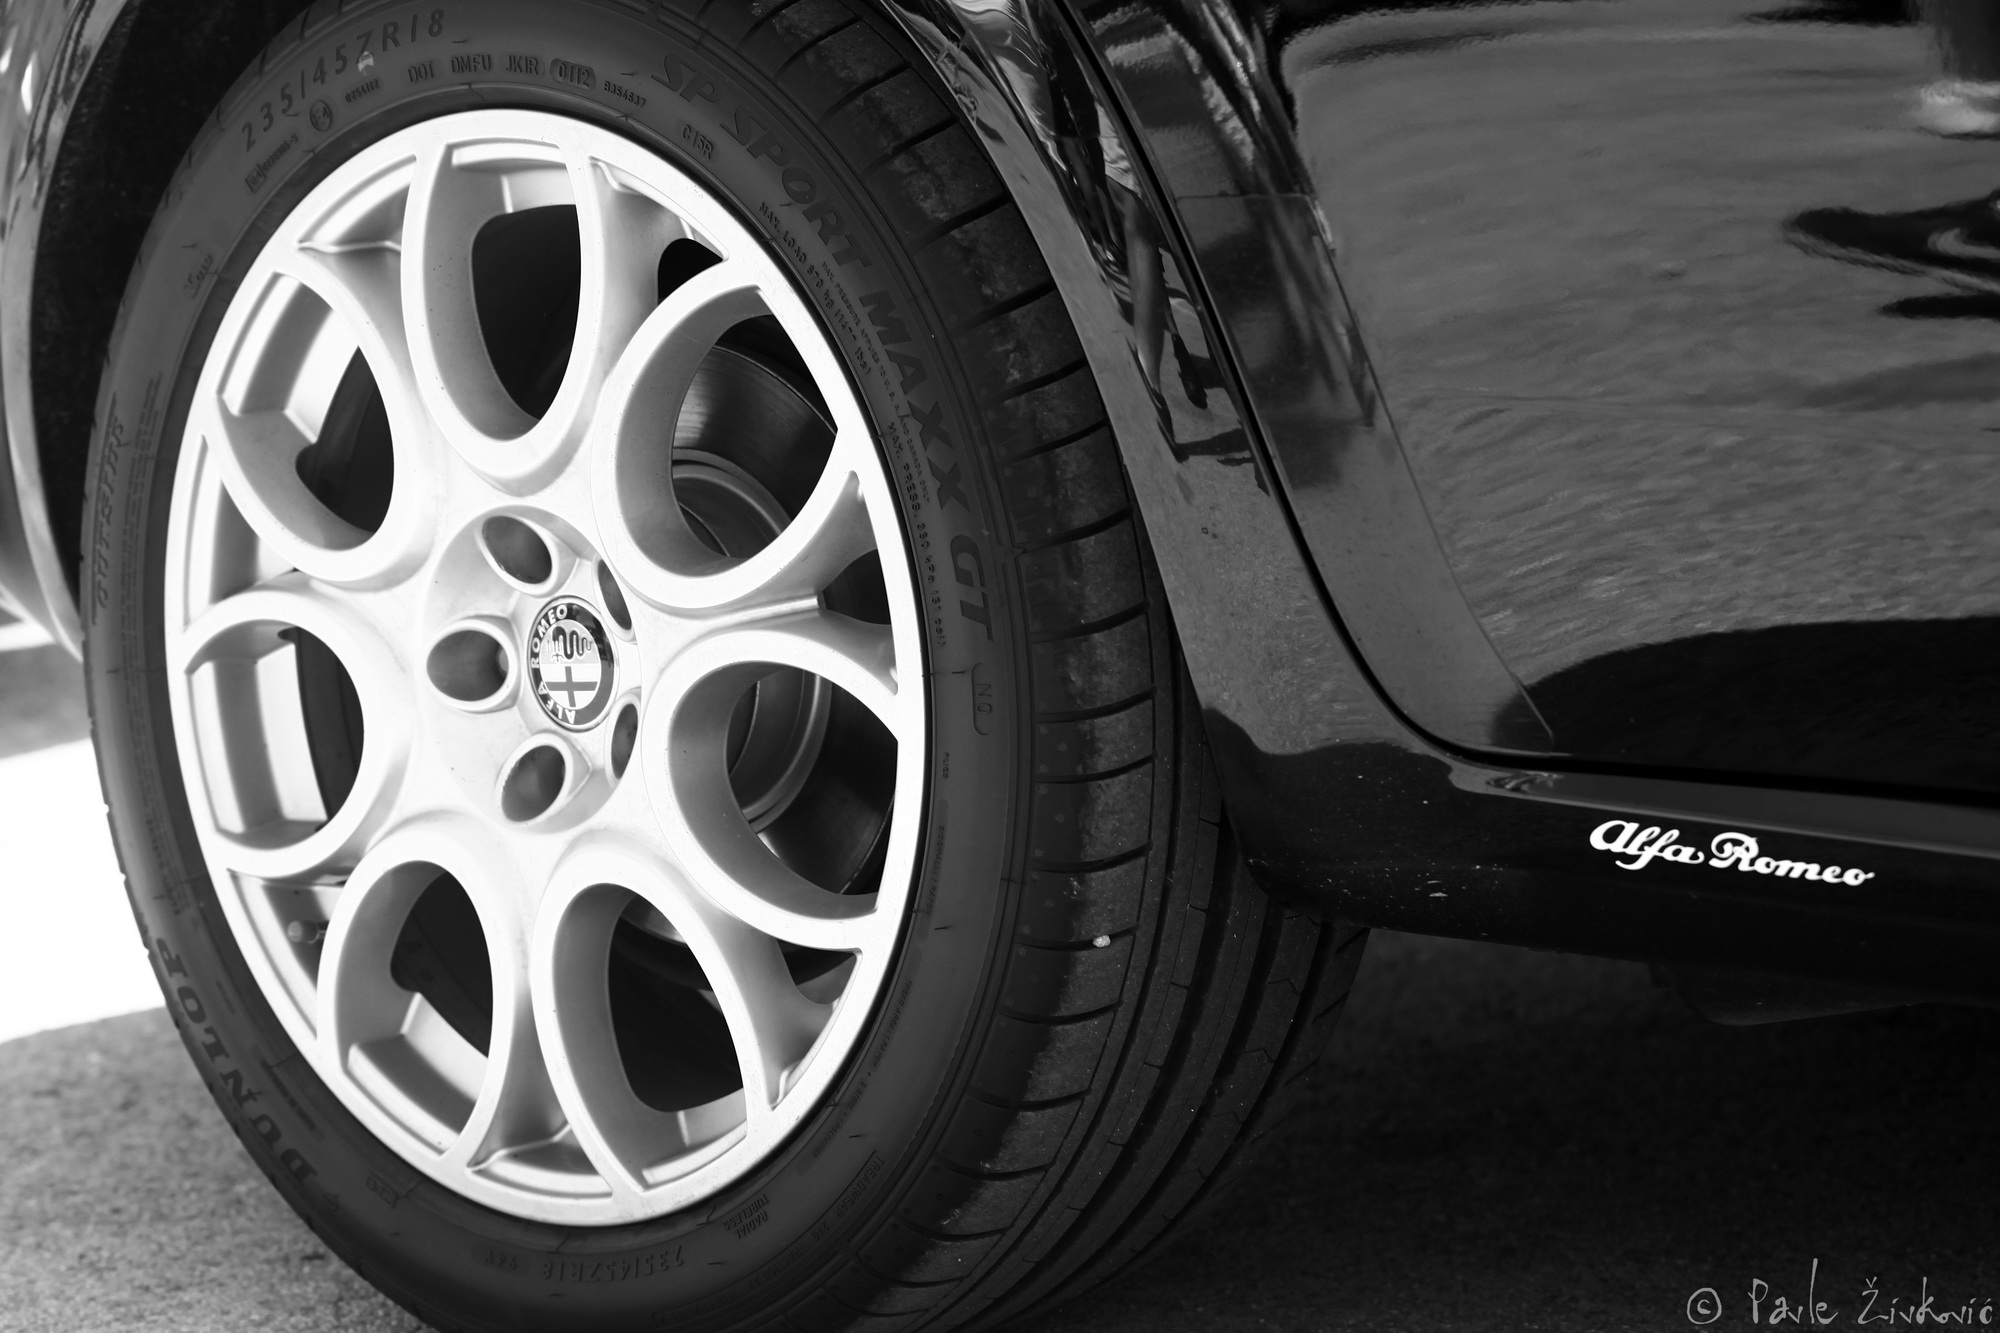 a close up of a tire of a car